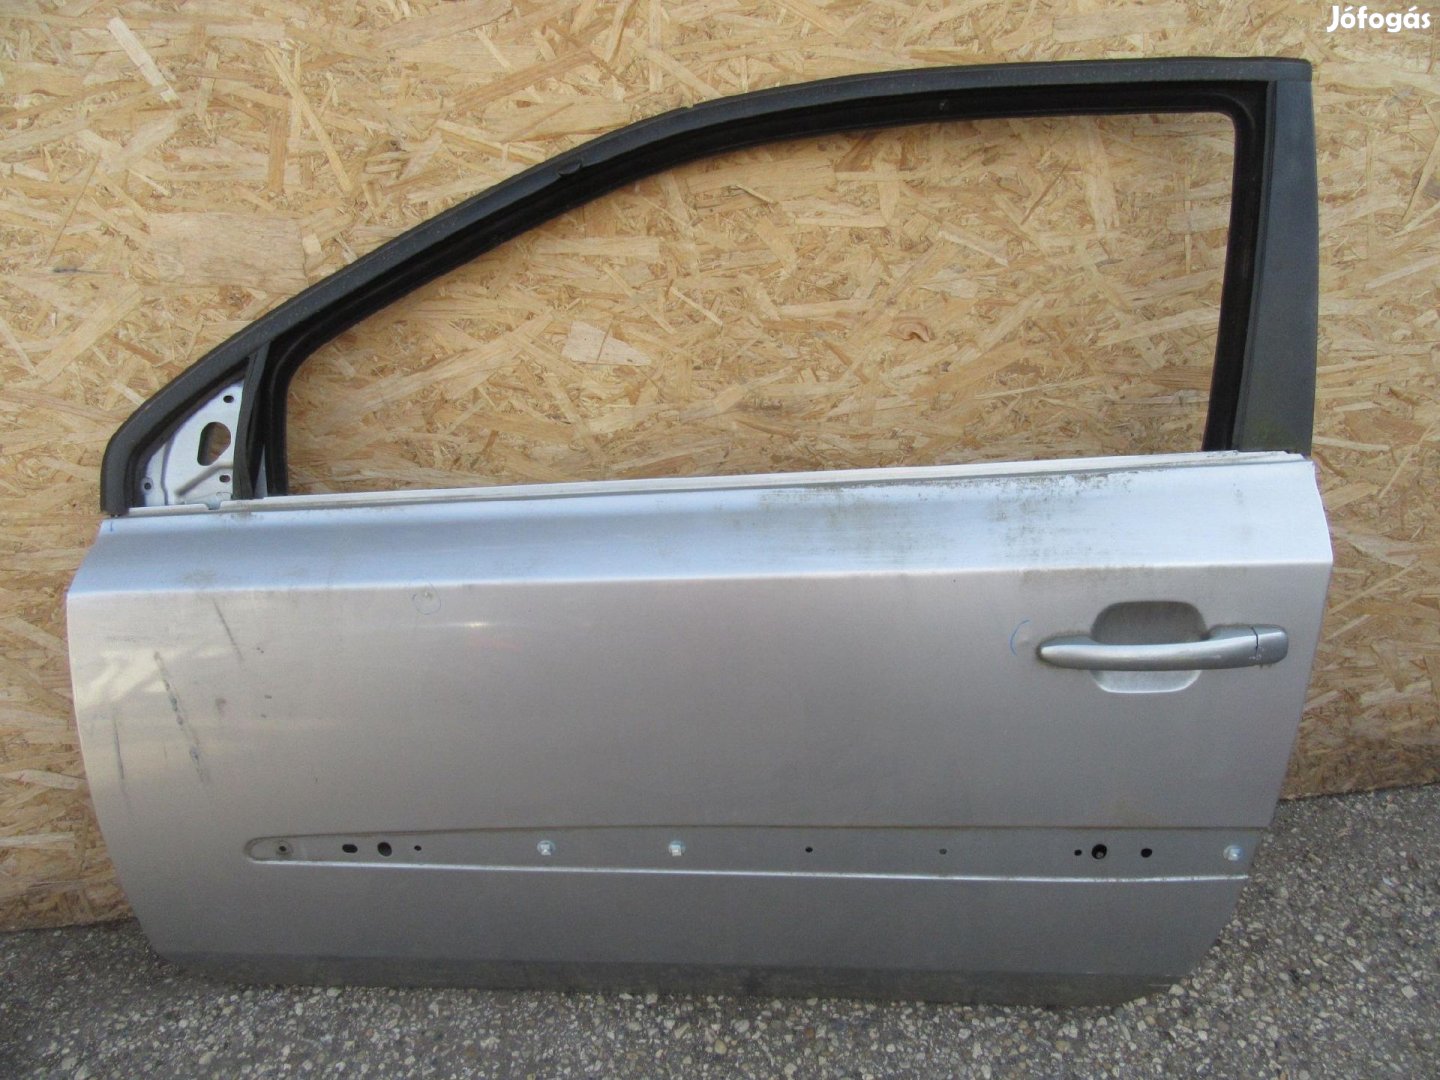 61877 Fiat Stilo 3 ajtós, ezüst színű bal oldali ajtó, a képen